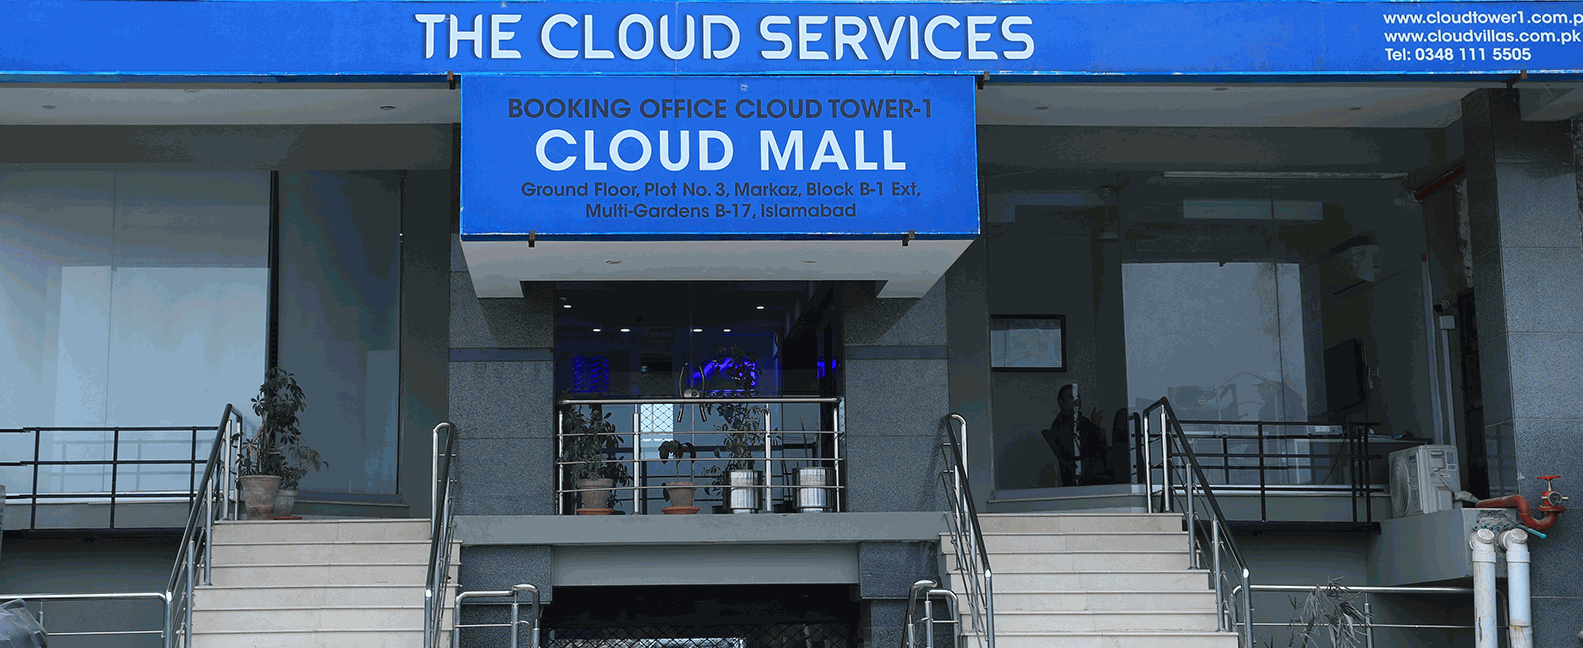 The Cloud Services